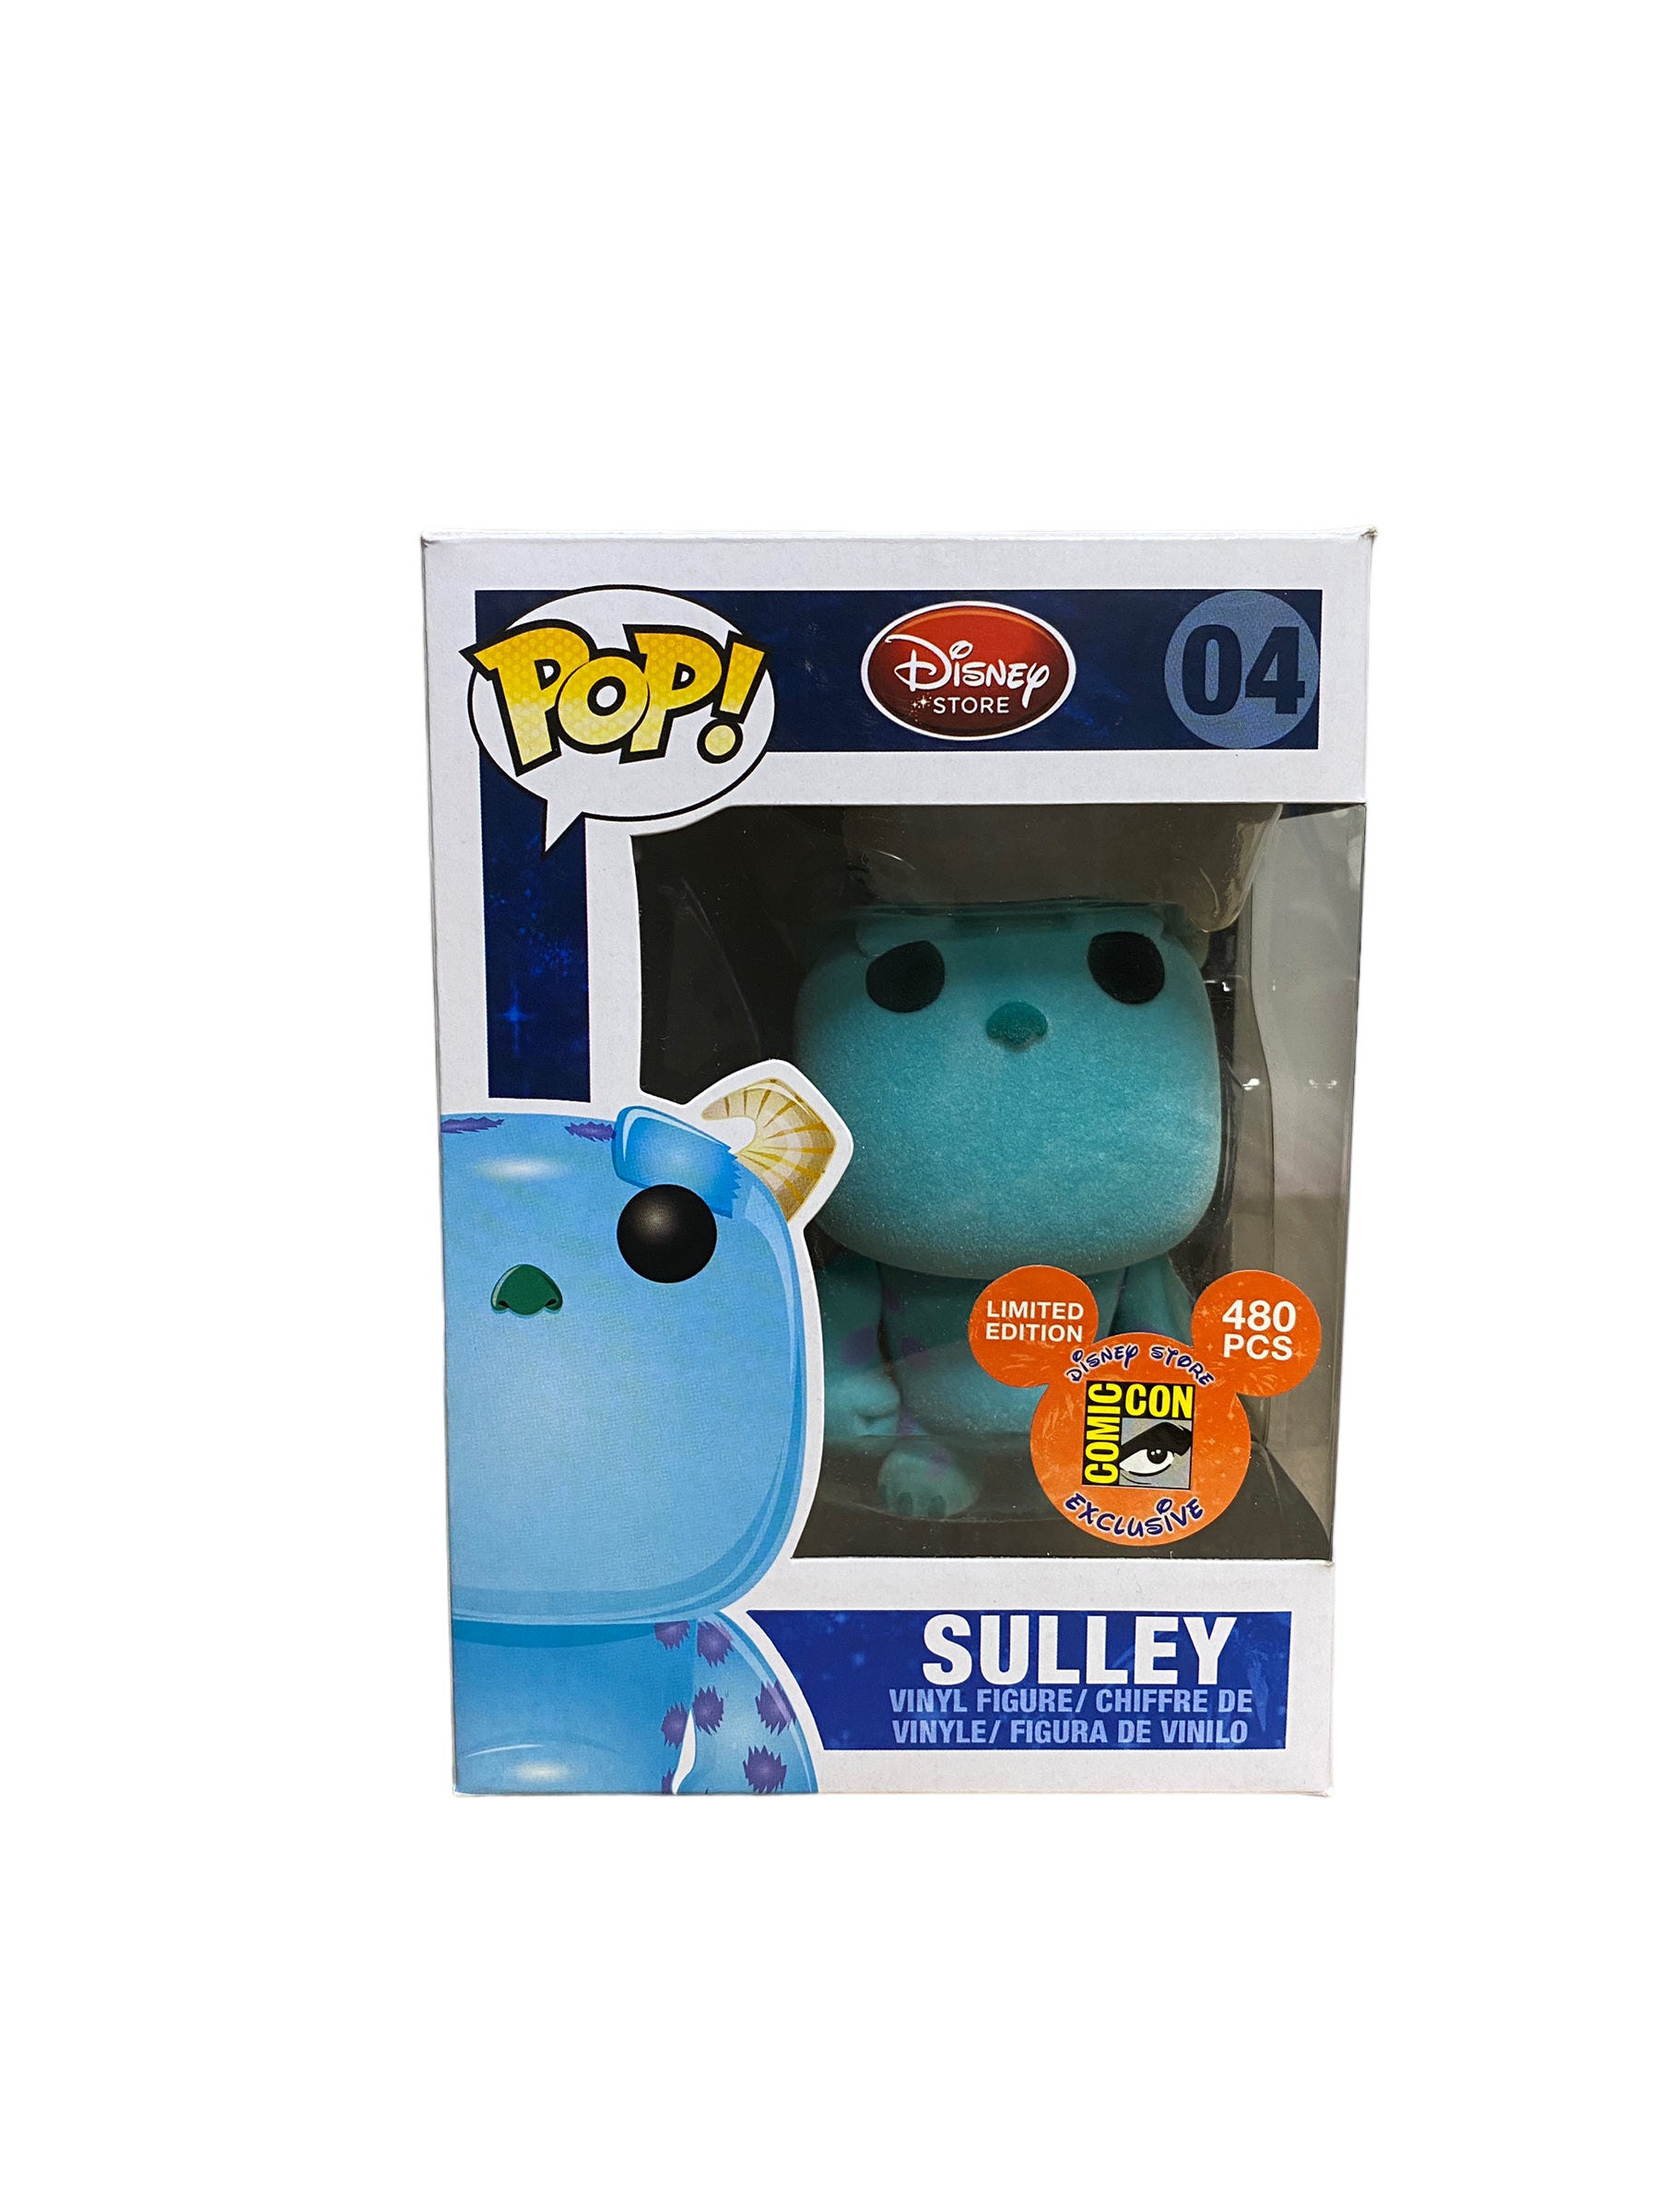 Sulley #04 (Flocked) Funko Pop! - Disney Series 1 - SDCC Disney Store Exclusive LE480 Pcs - Condition 8/10